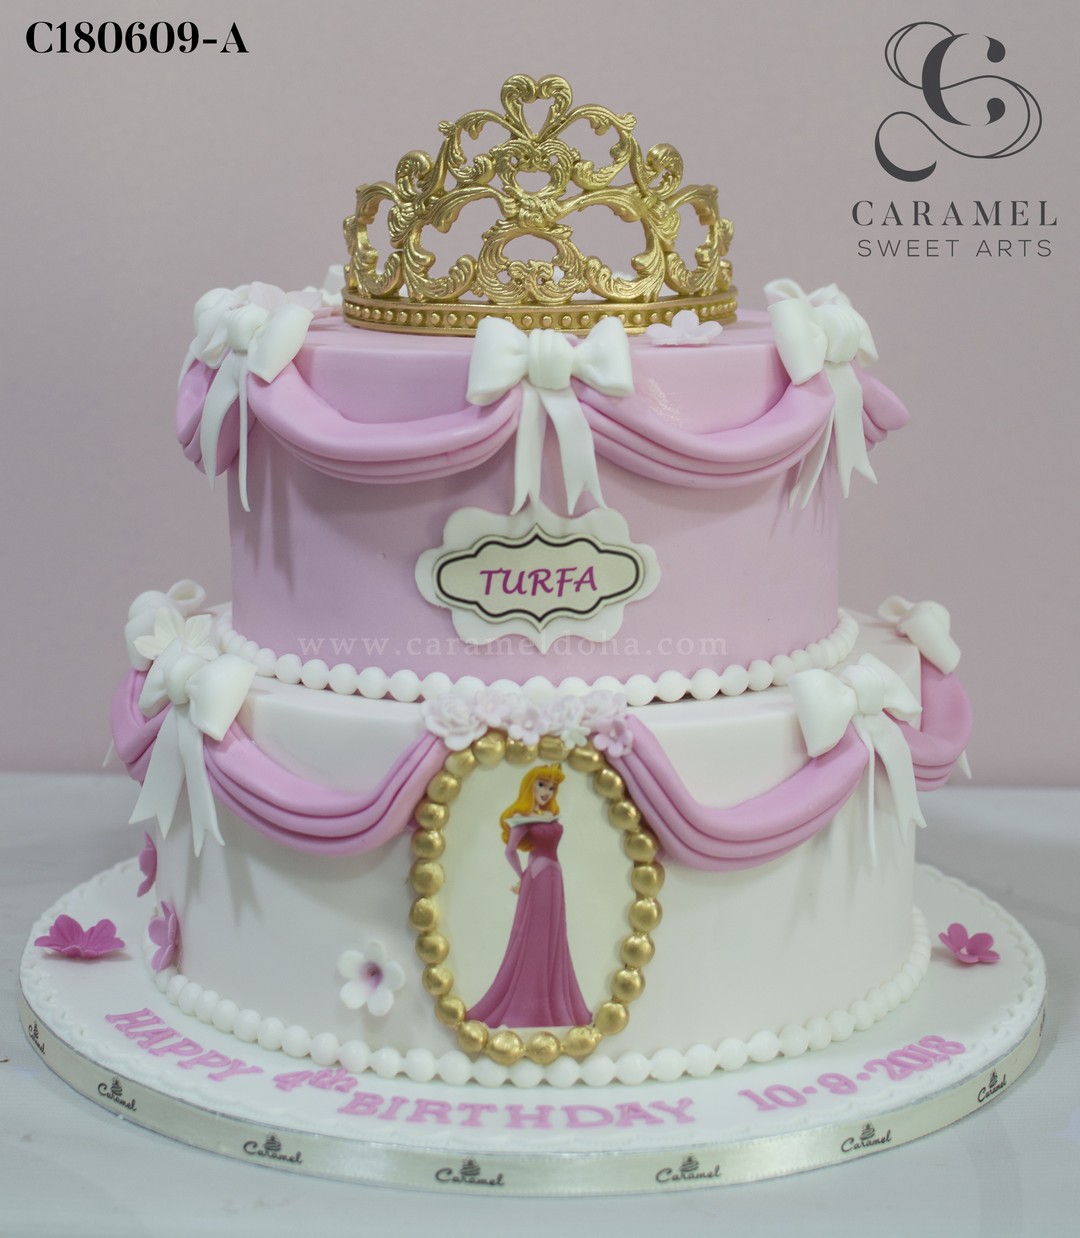 SLEEPING BEAUTY CAKE | Sleeping beauty cake, Doll cake, Pink birthday cakes